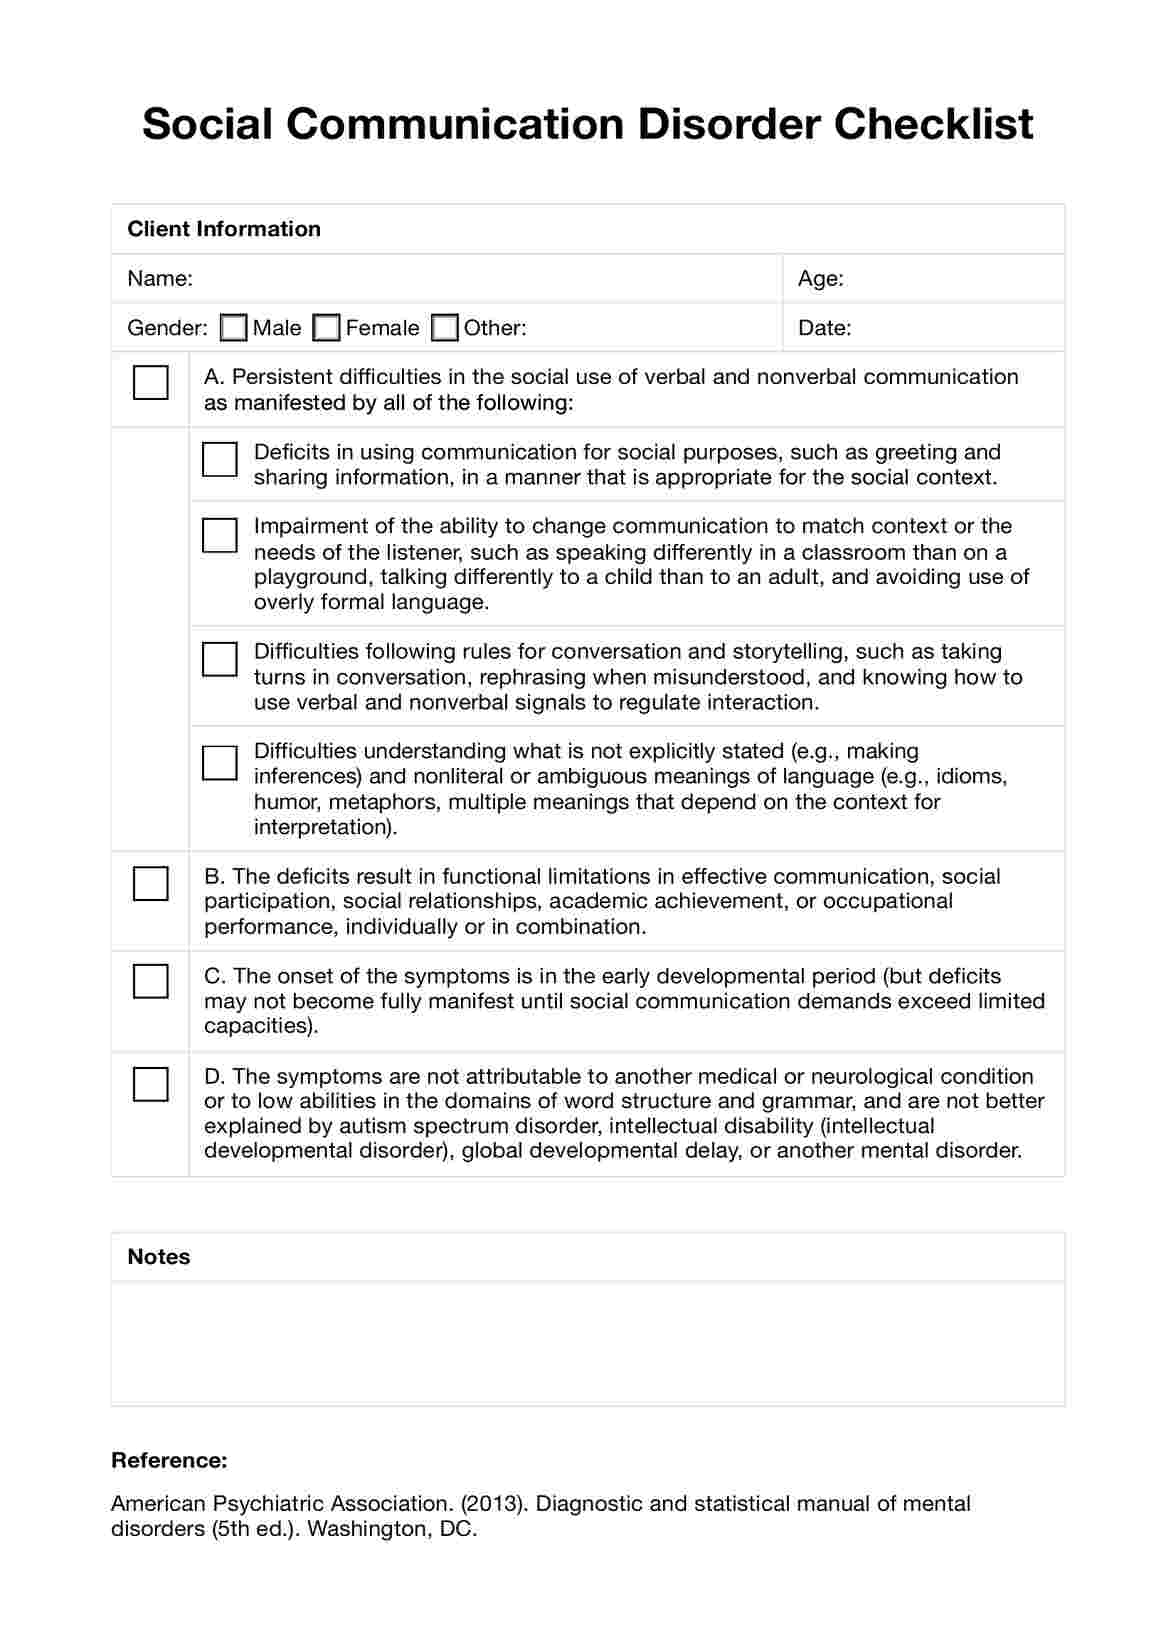 Social Communication Disorder Checklist PDF PDF Example